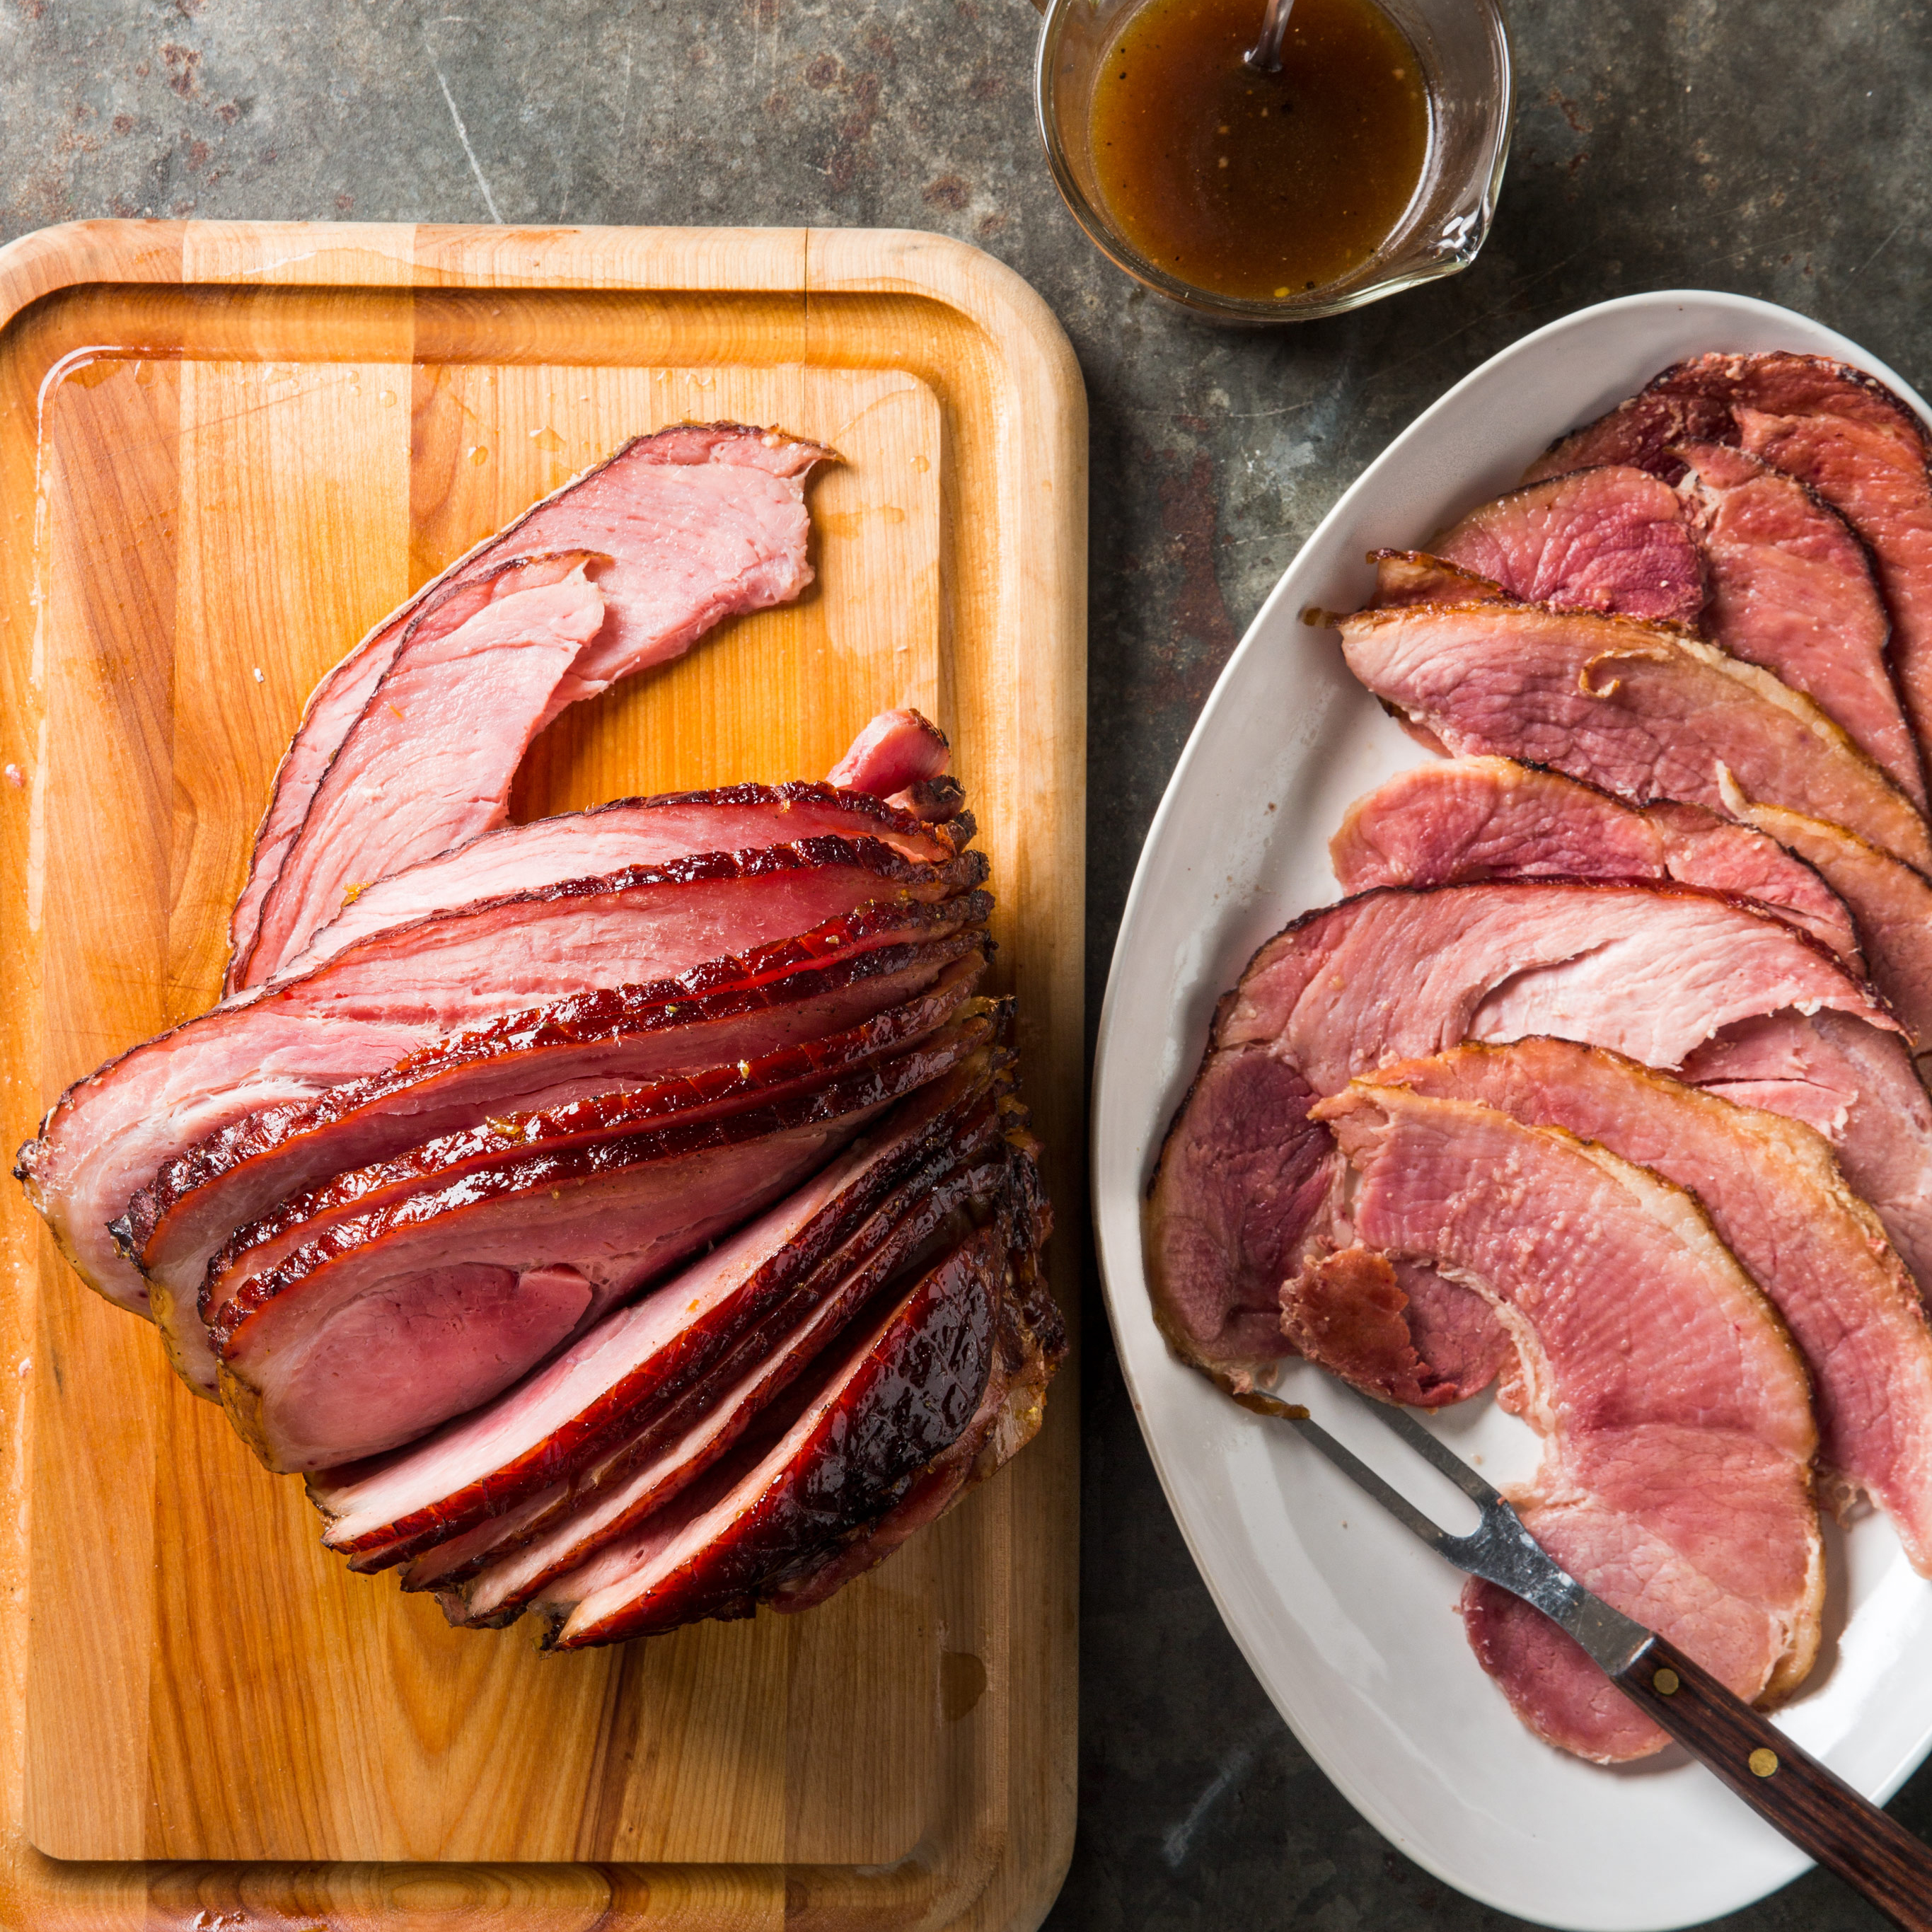 How To Cook A Kirkland Spiral Ham Plus A Glaze - FOOLPROOF!